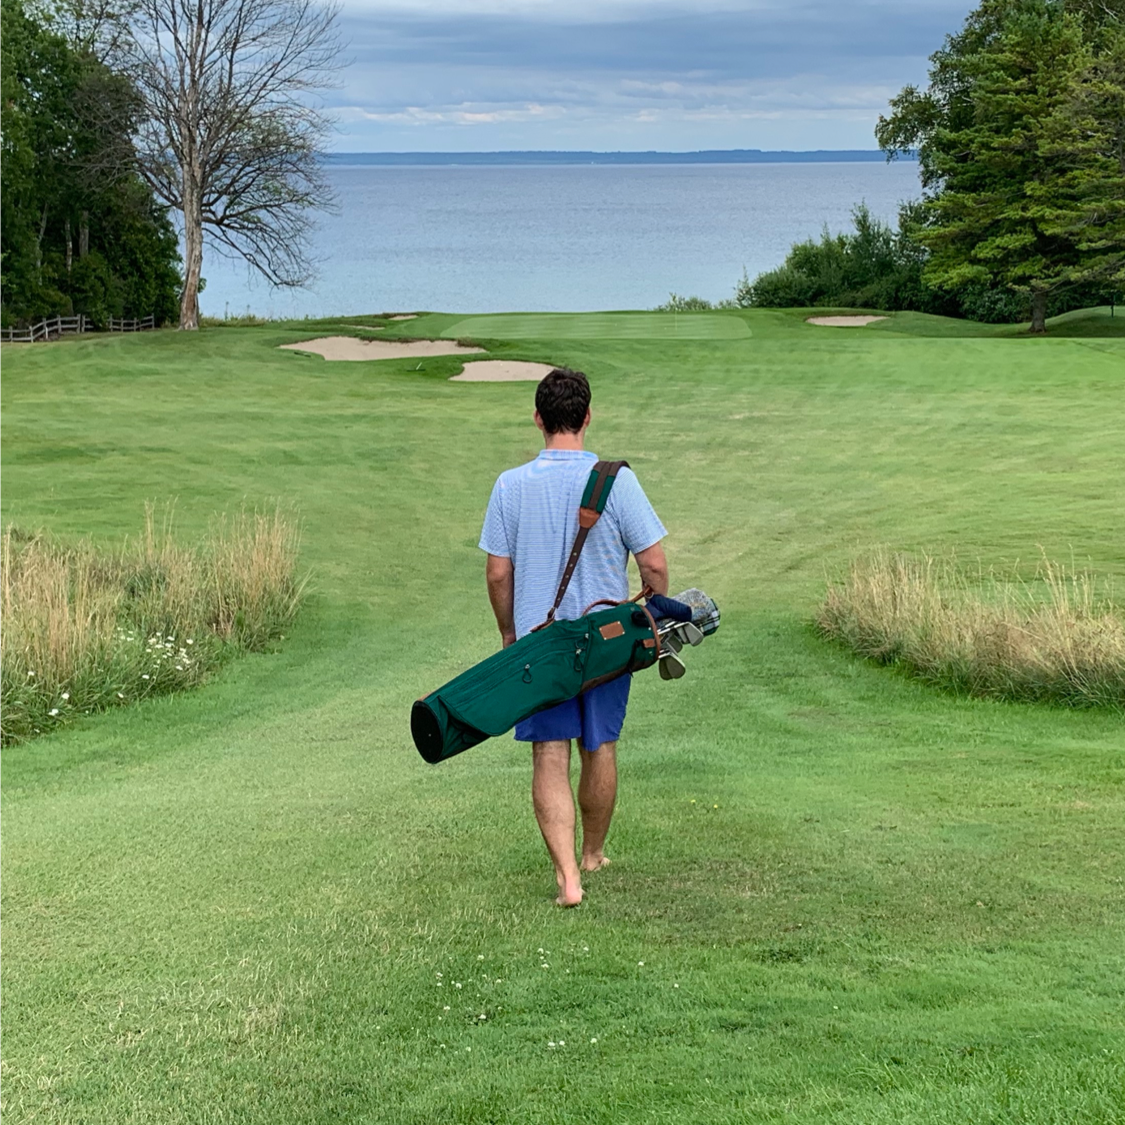 Green Sunday golf bag on barefoot walking golfer